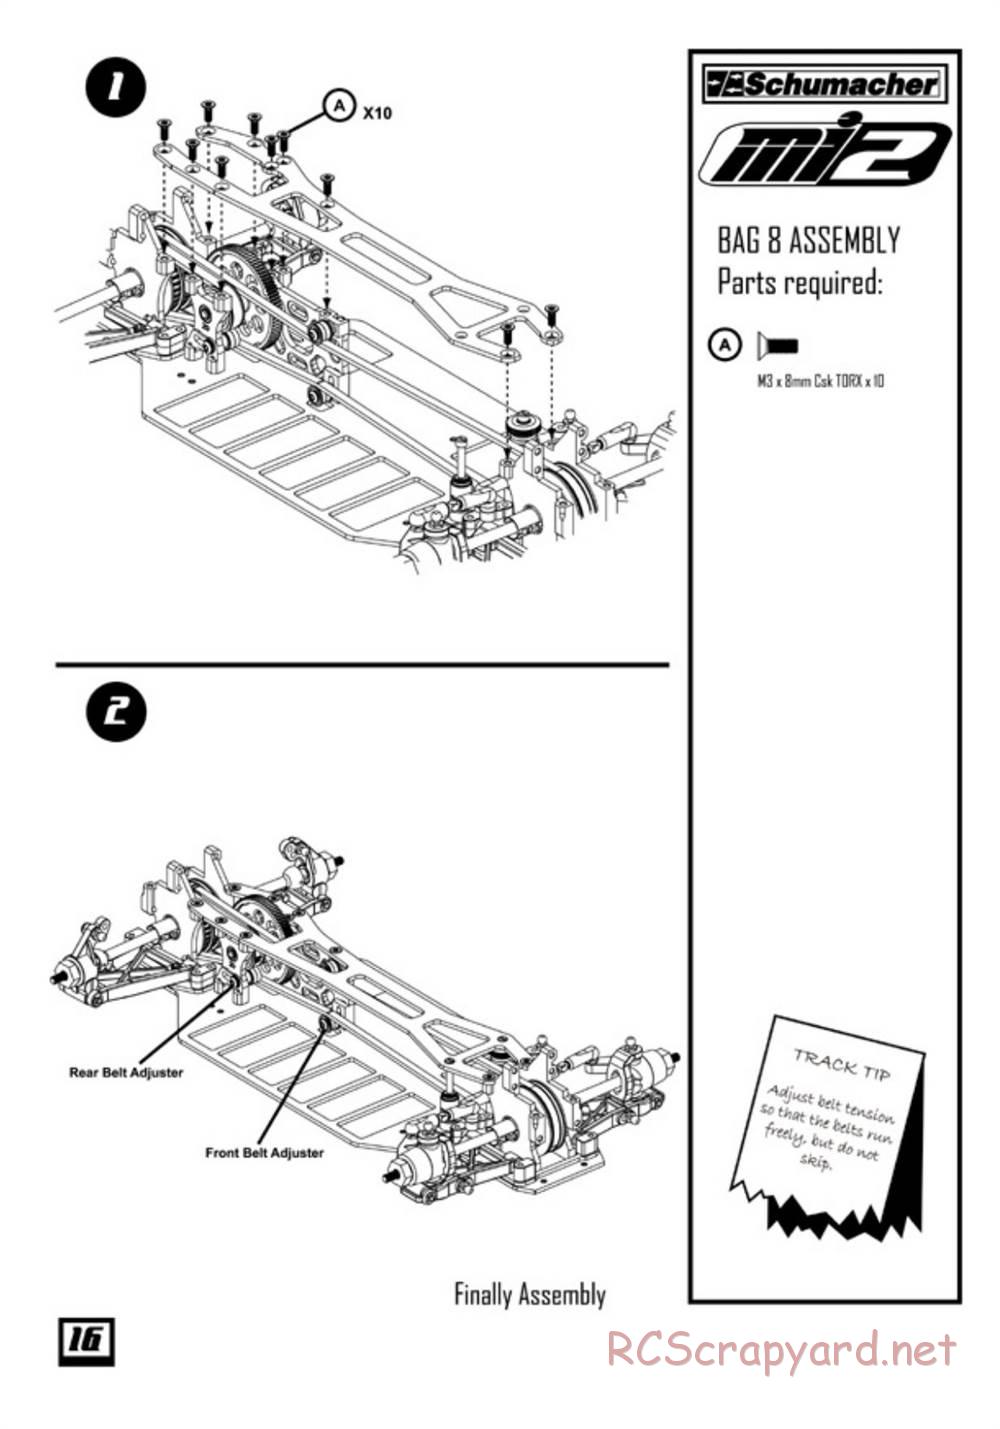 Schumacher - Mi2 - Manual - Page 18